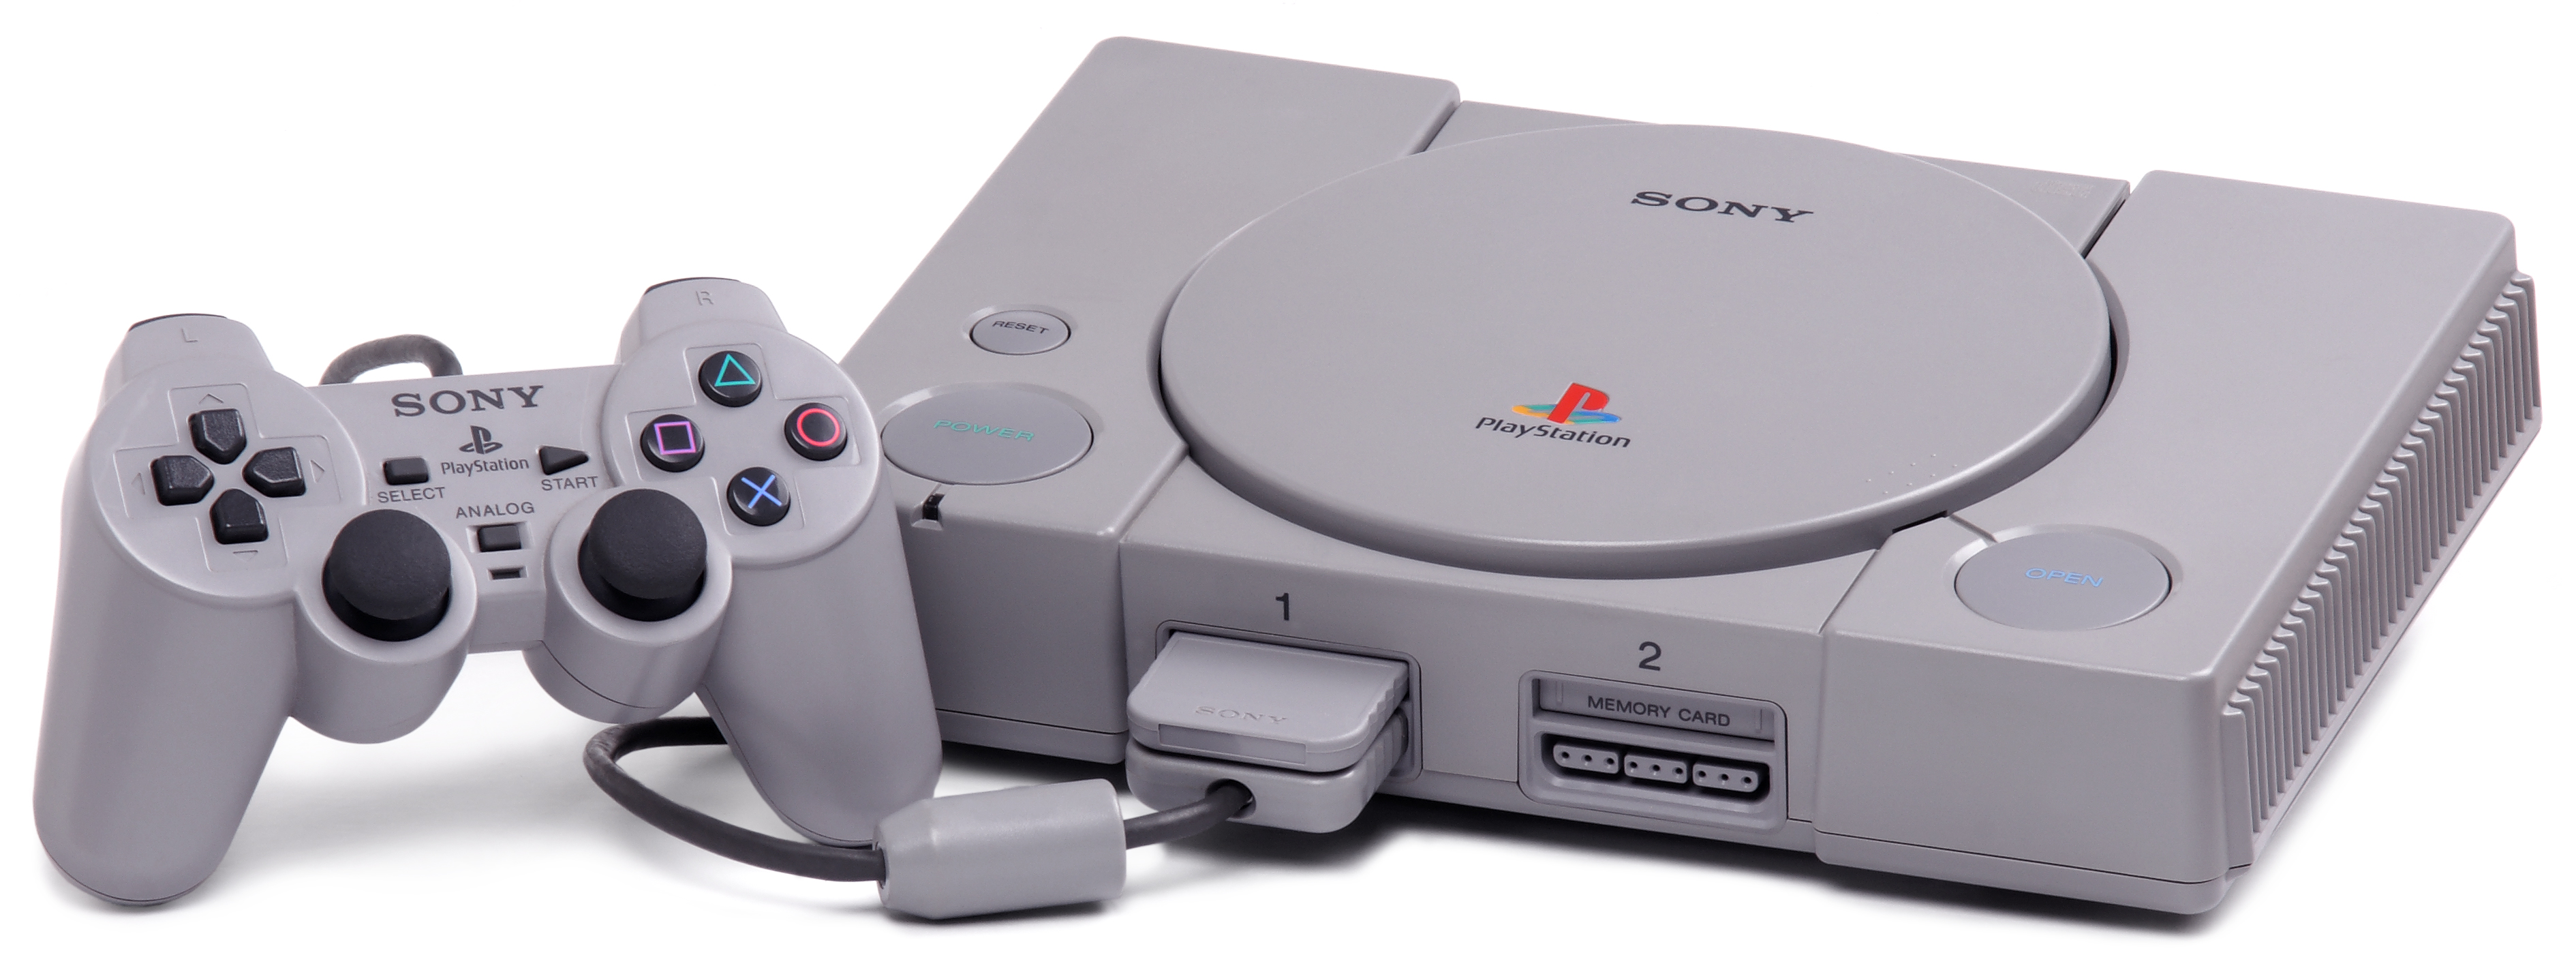 Playstation (1994-2005) – History of 